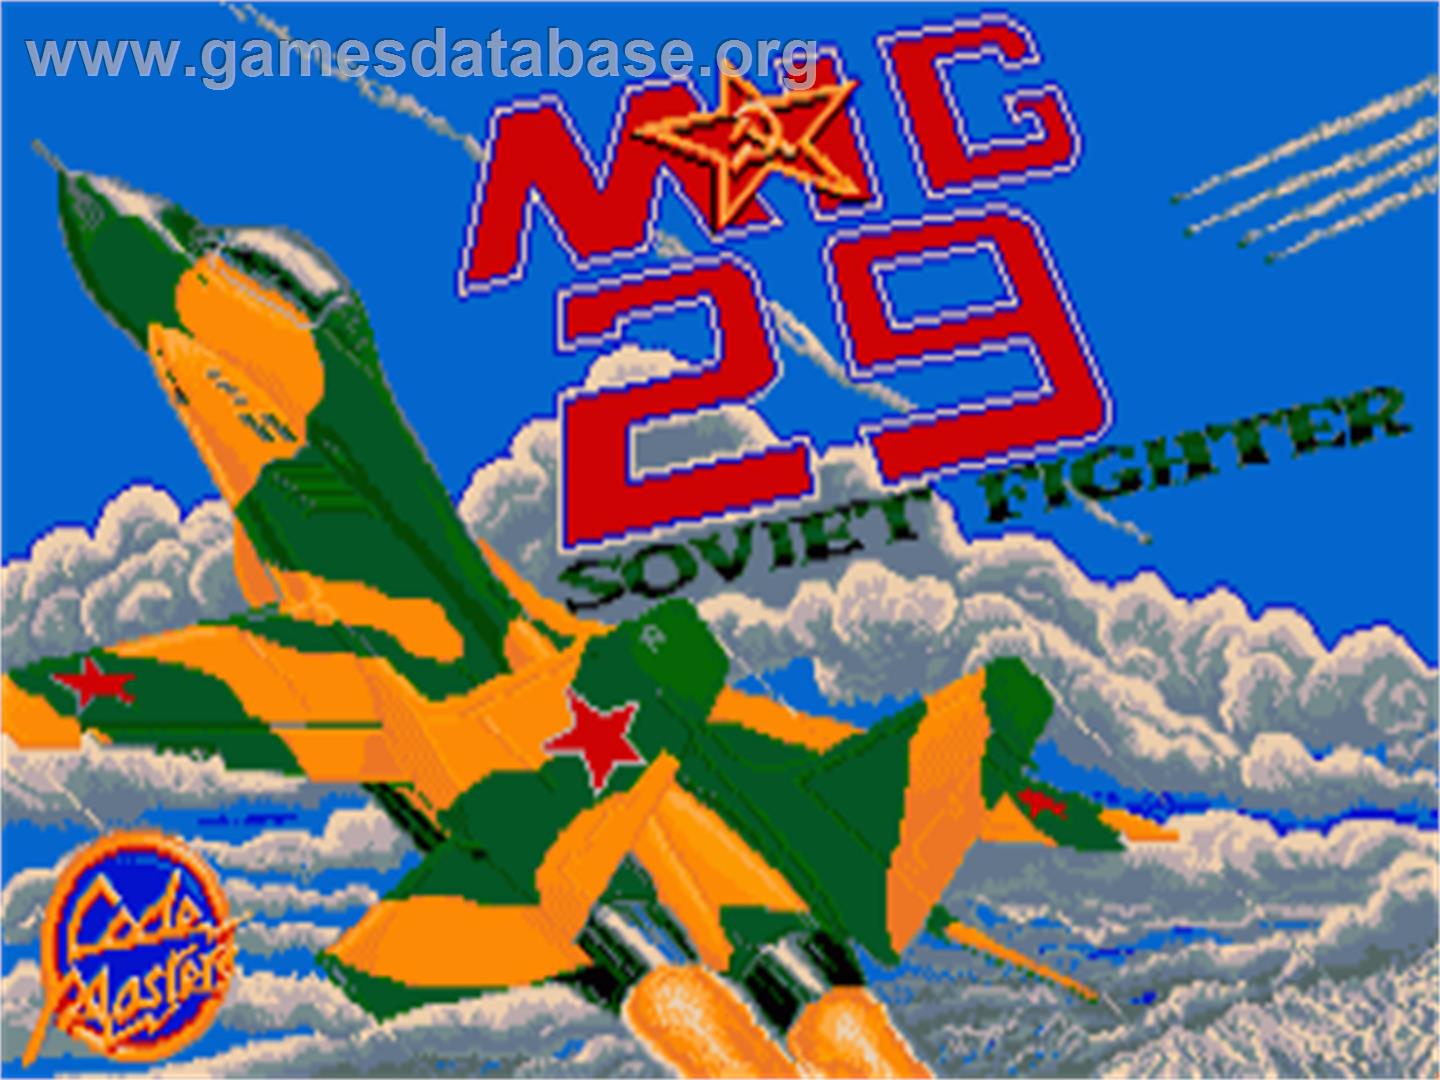 Mig-29 Soviet Fighter - Commodore Amiga - Artwork - Title Screen